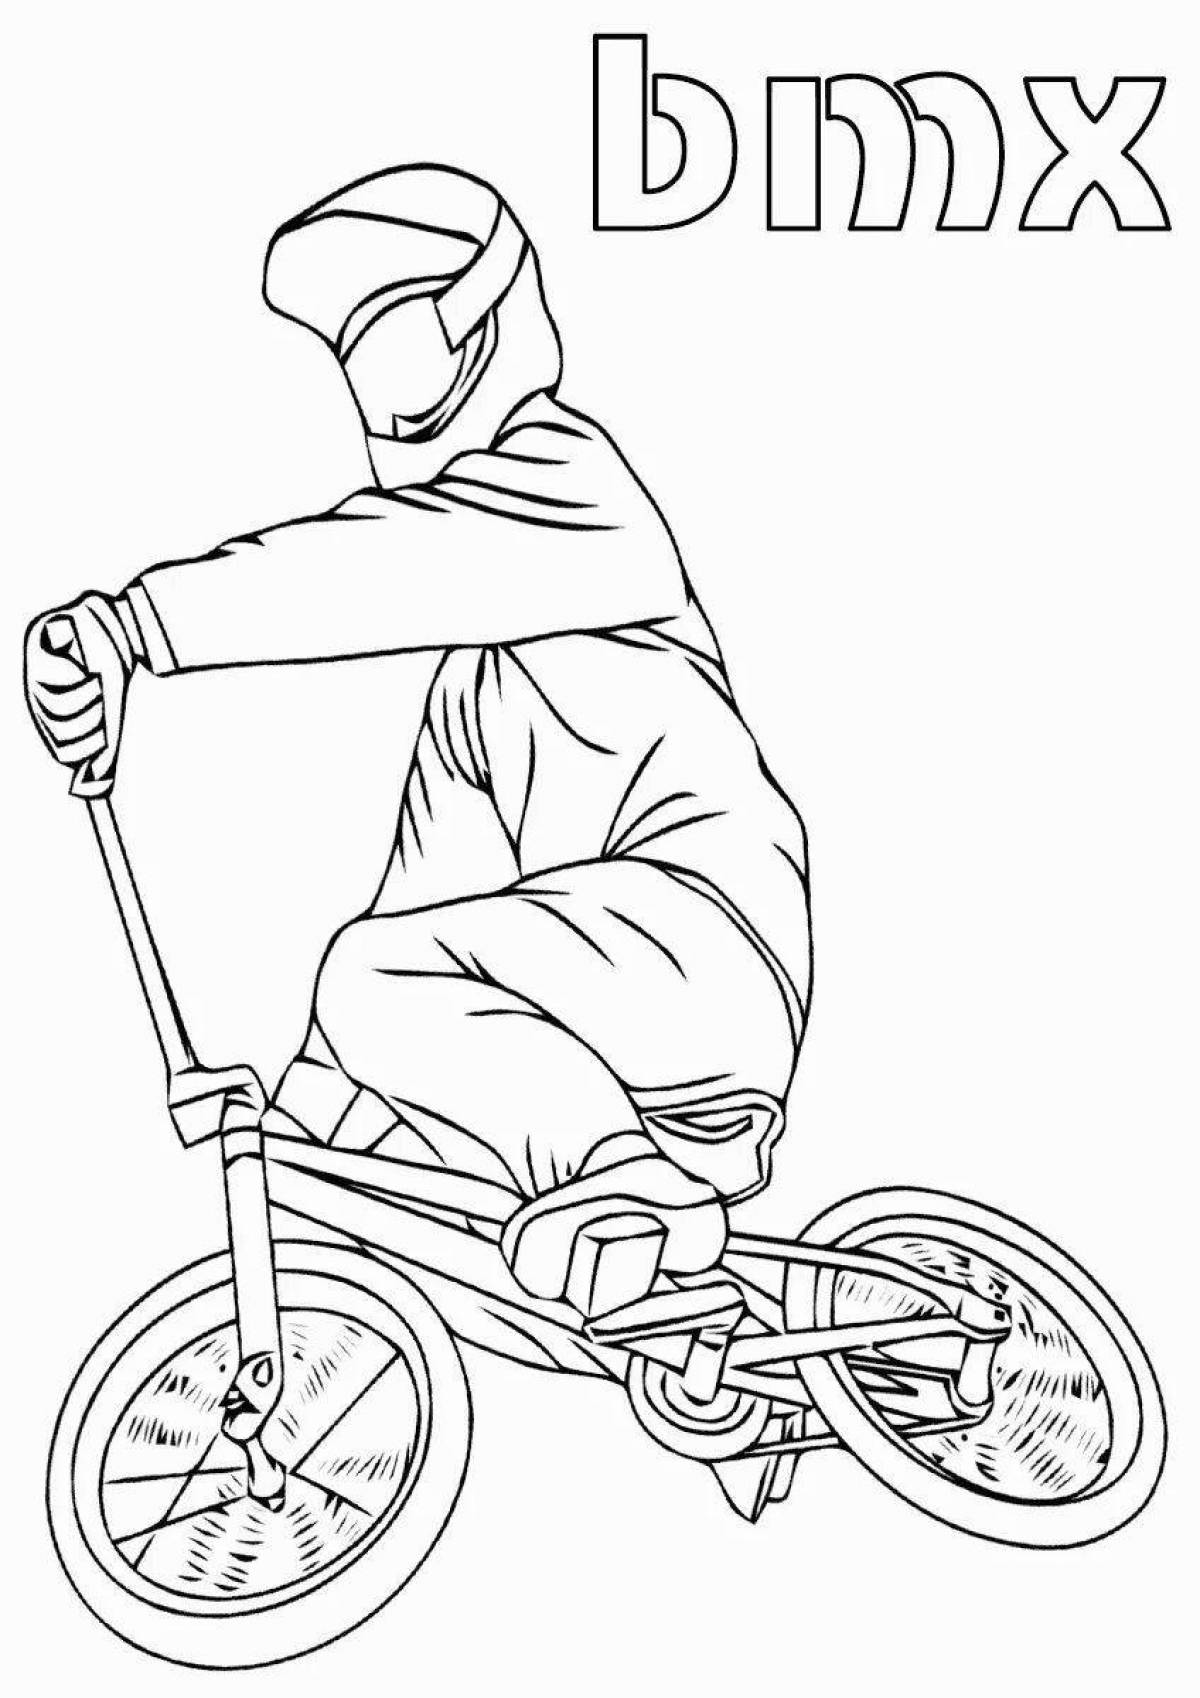 BMX как искусство - Cyclepedia